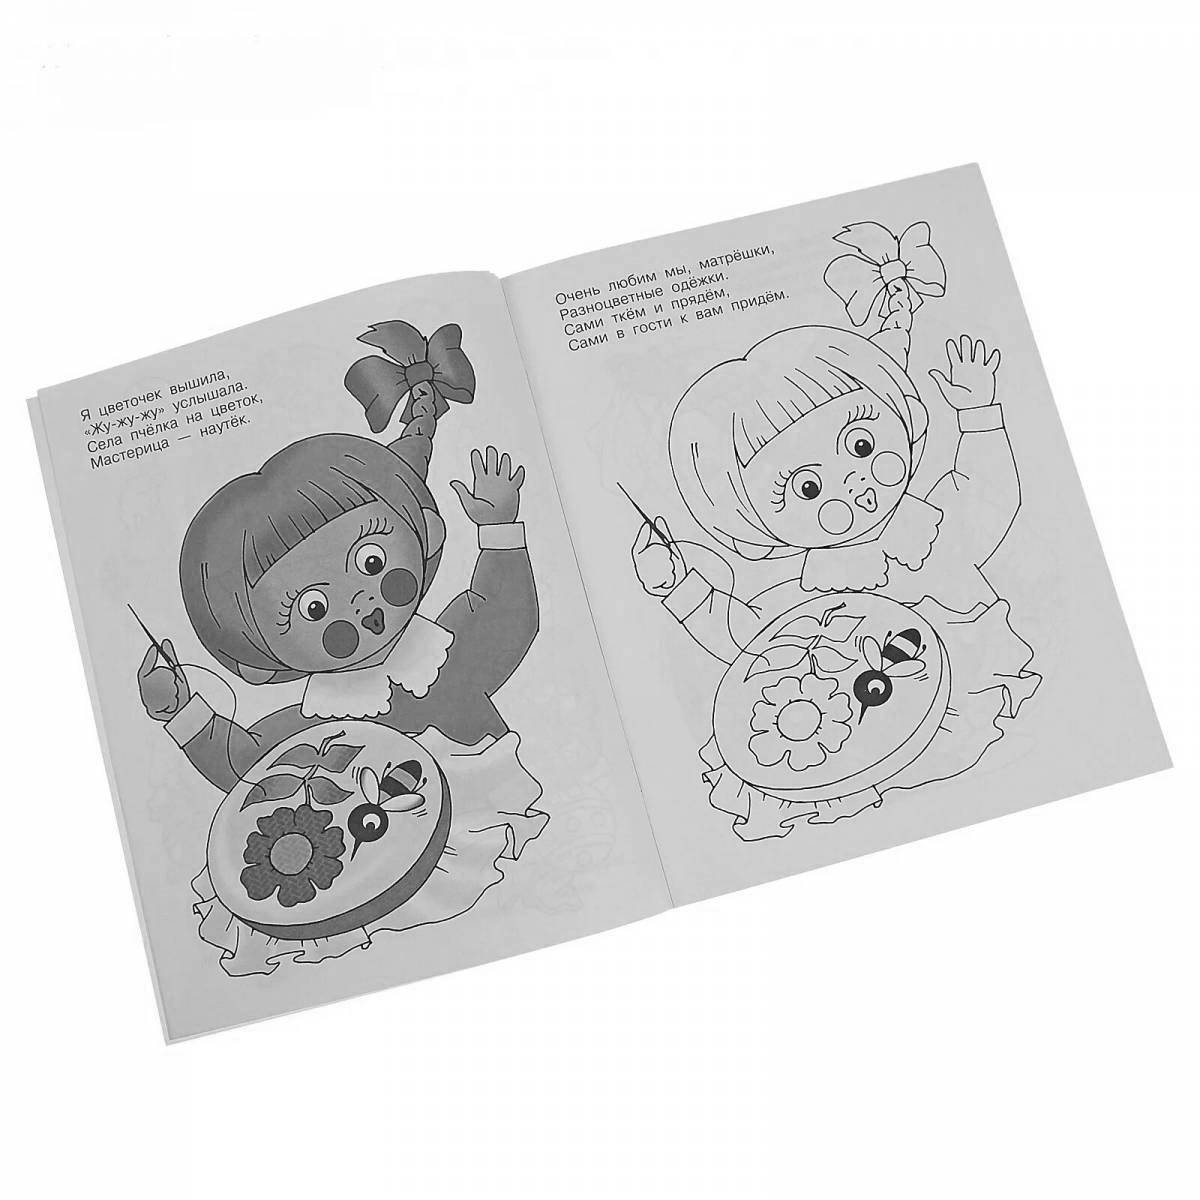 Joyful coloring book for children